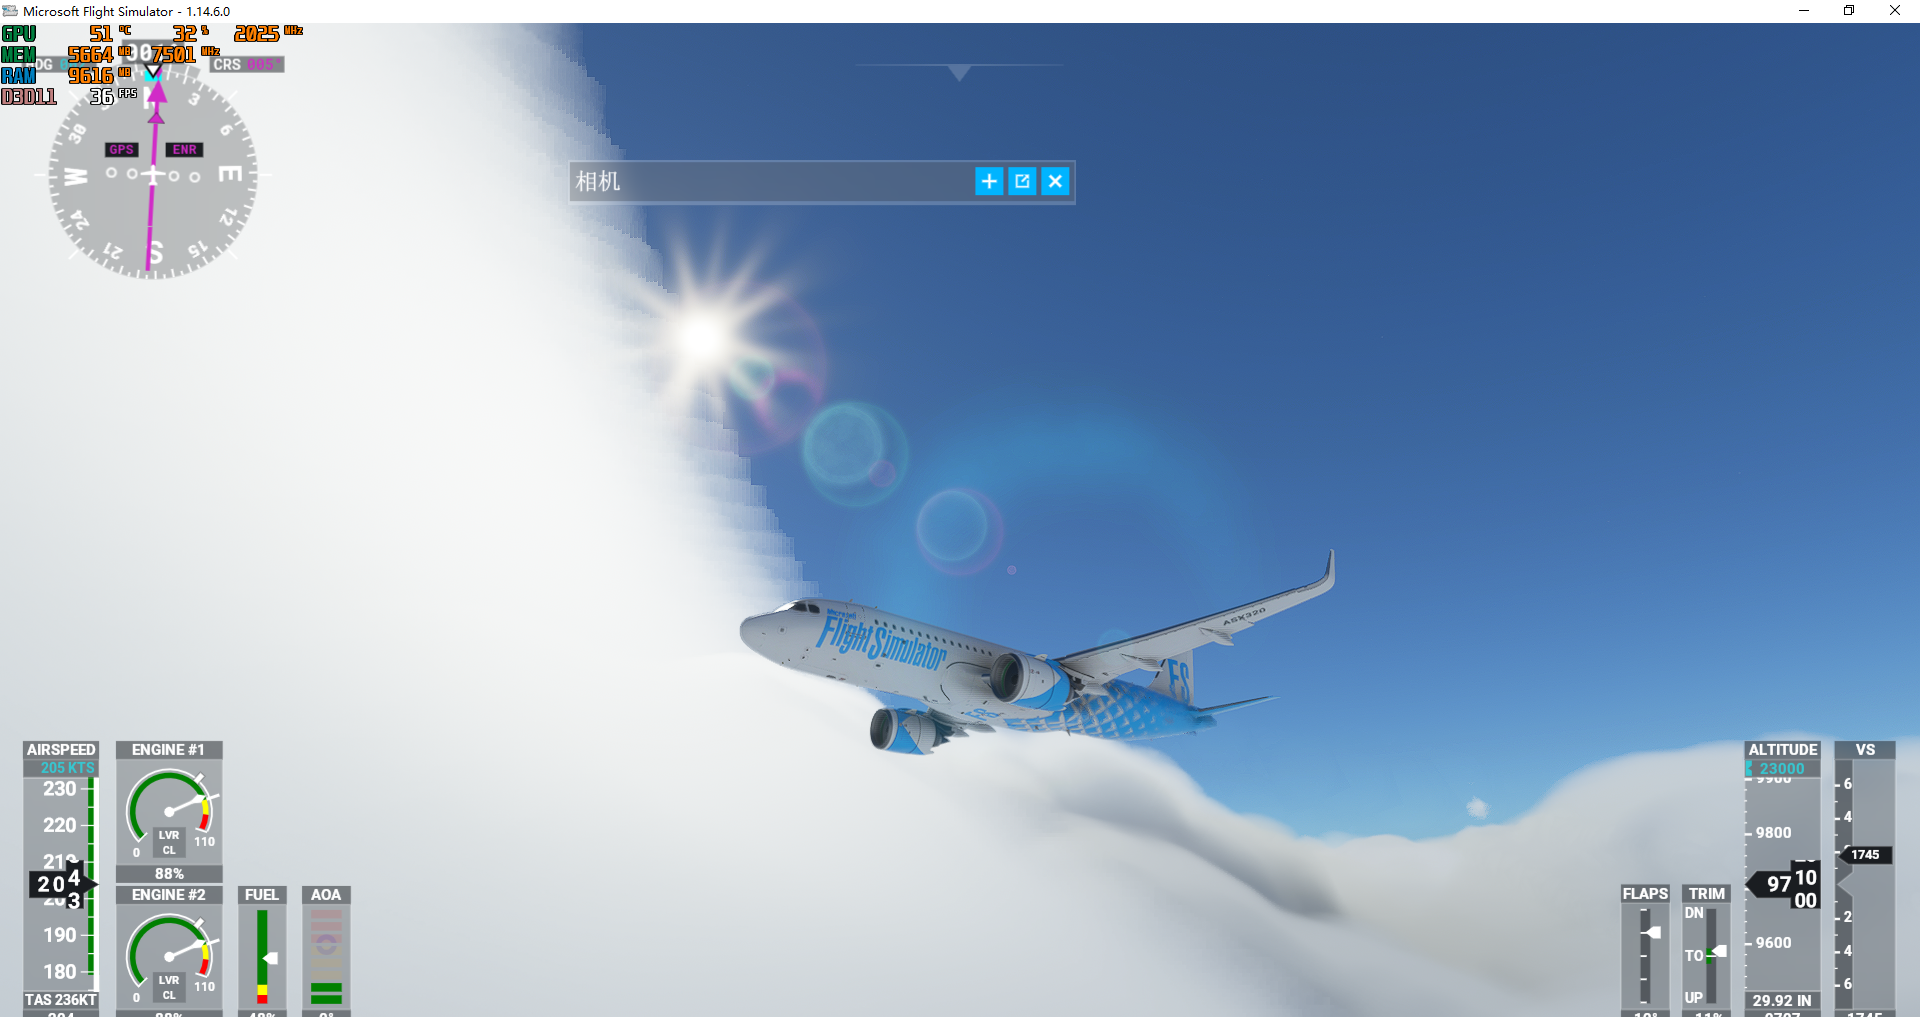 Microsoft Flight Simulator - 1.14.6.0 2021_4_11 10_57_24.png